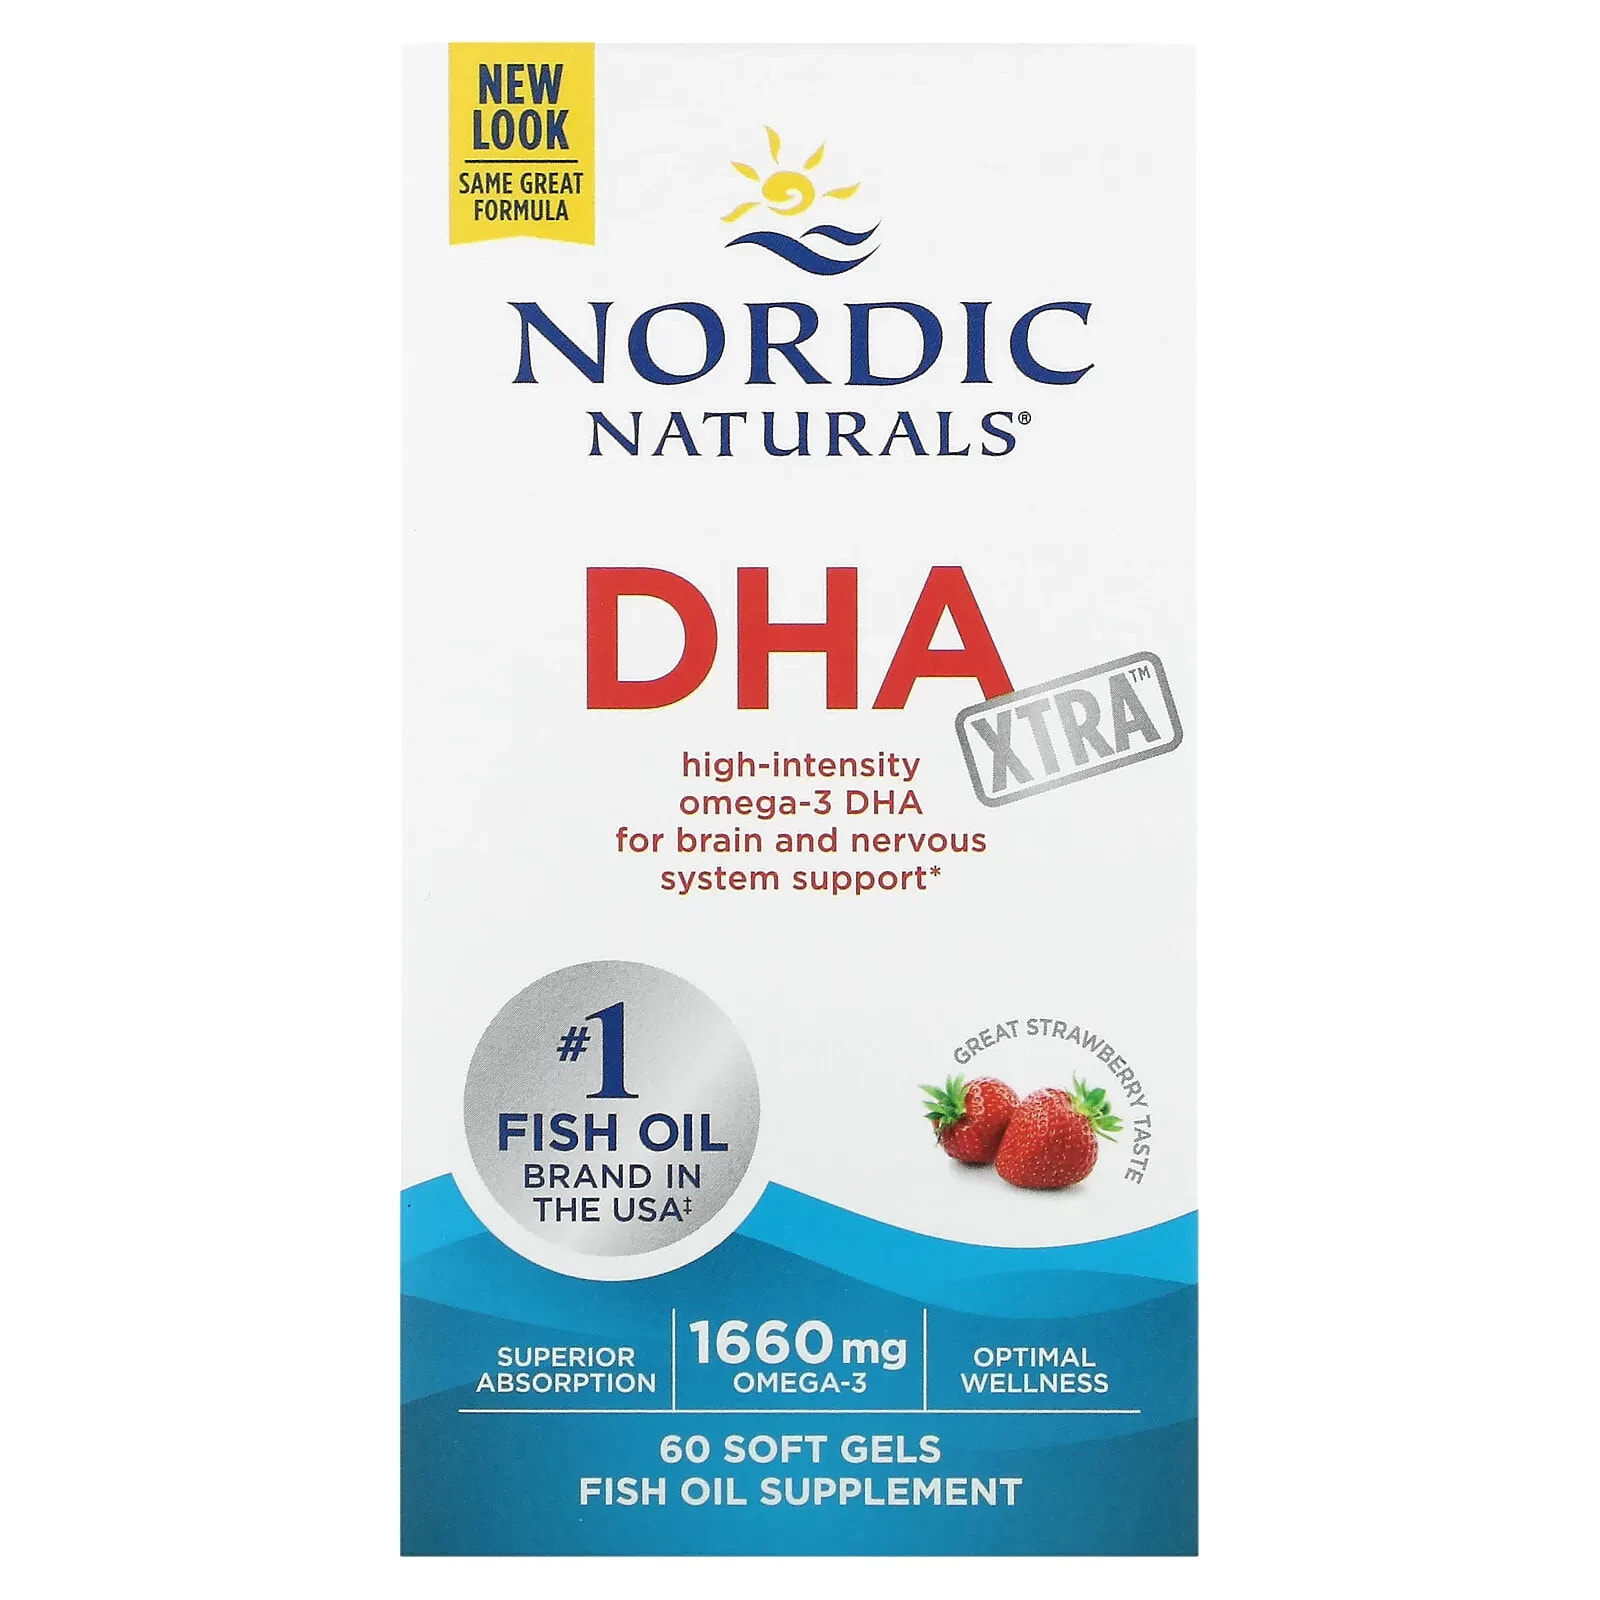 Нордик Натуралс, DHA Xtra, клубничный вкус, 830 мг, 60 мягких таблеток